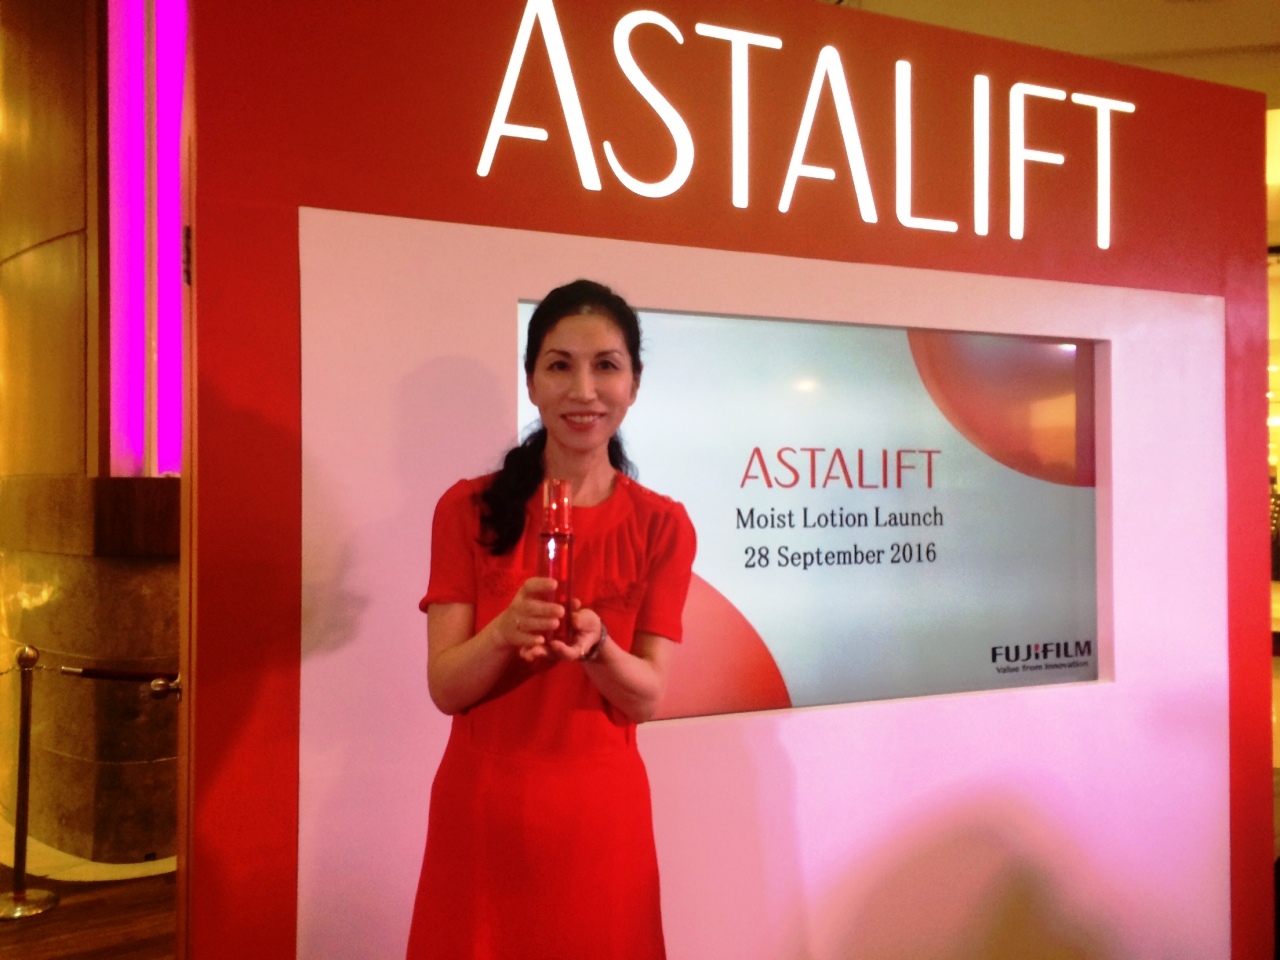 Ms Yumiko Komiyama posed with the new ASTALIFT Moist Lotion